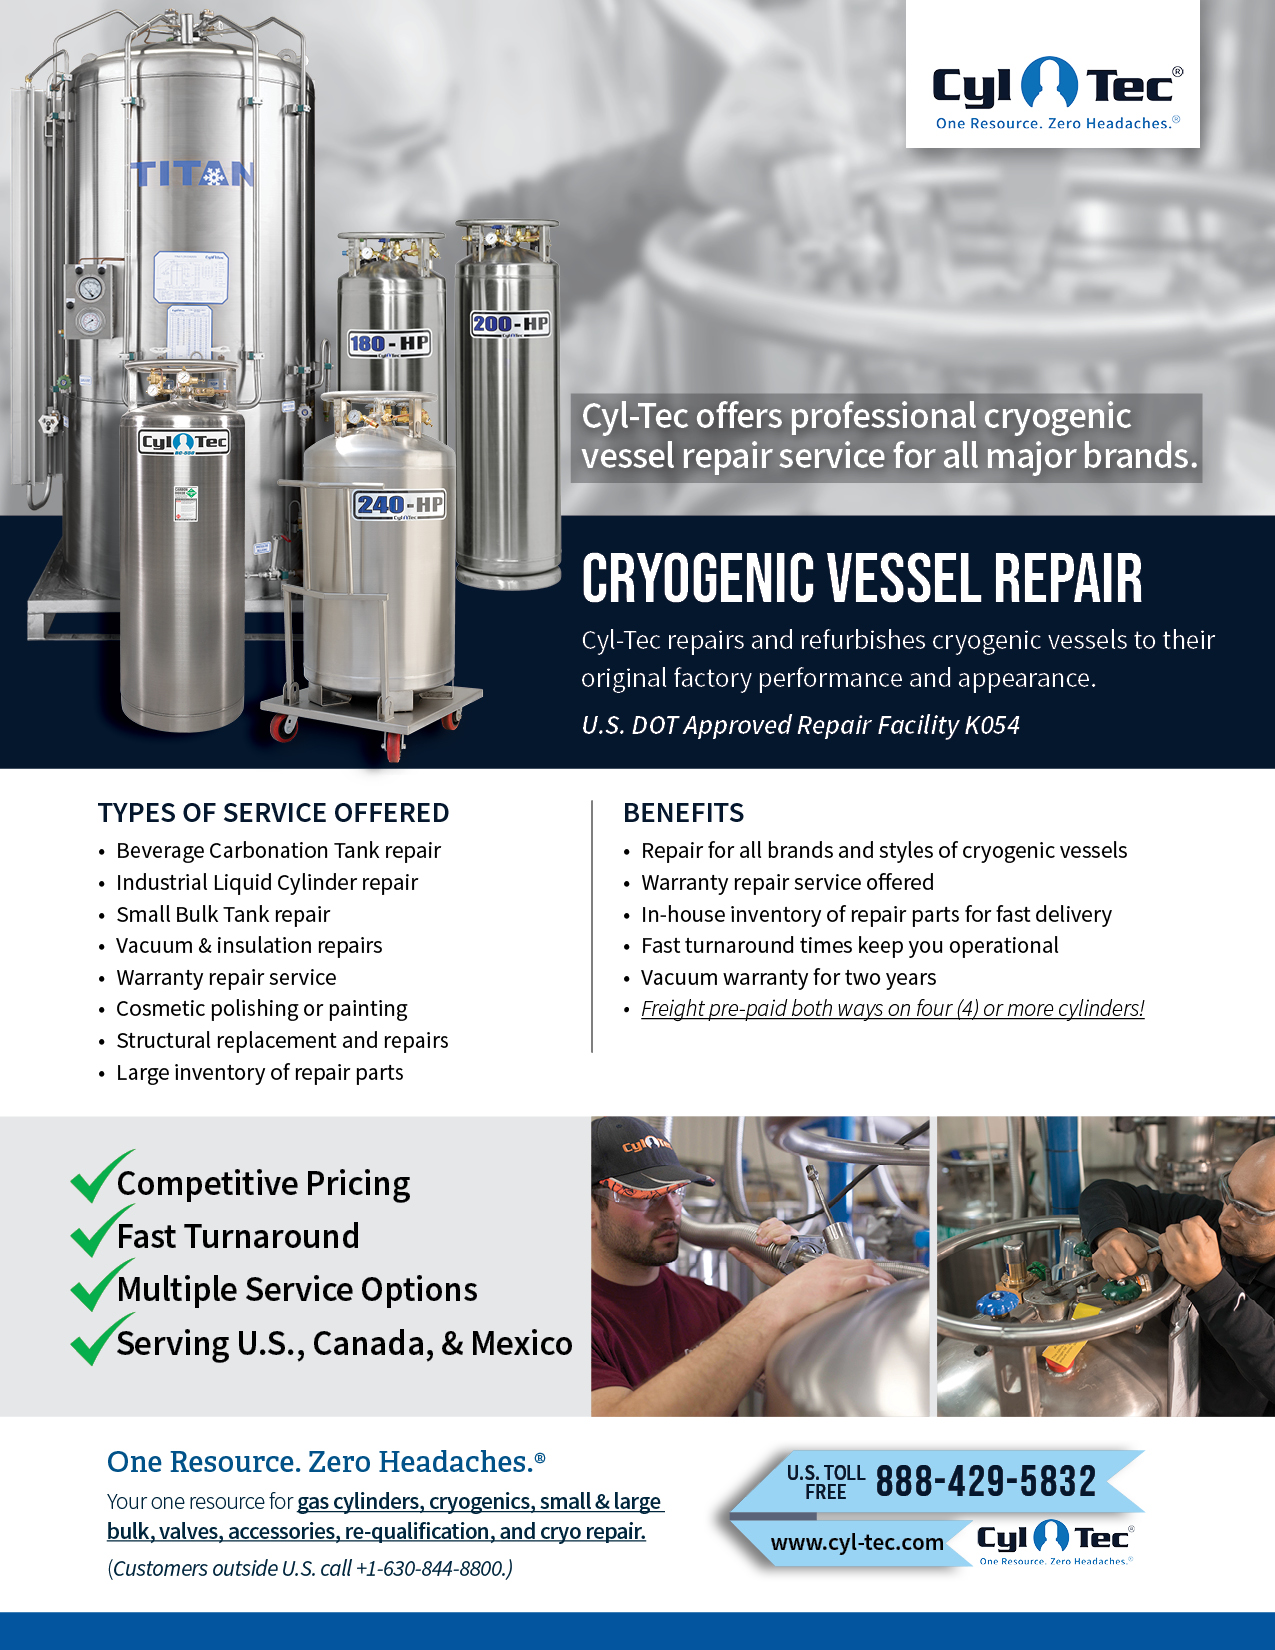 CylTec Cryogenic Vessel Repair